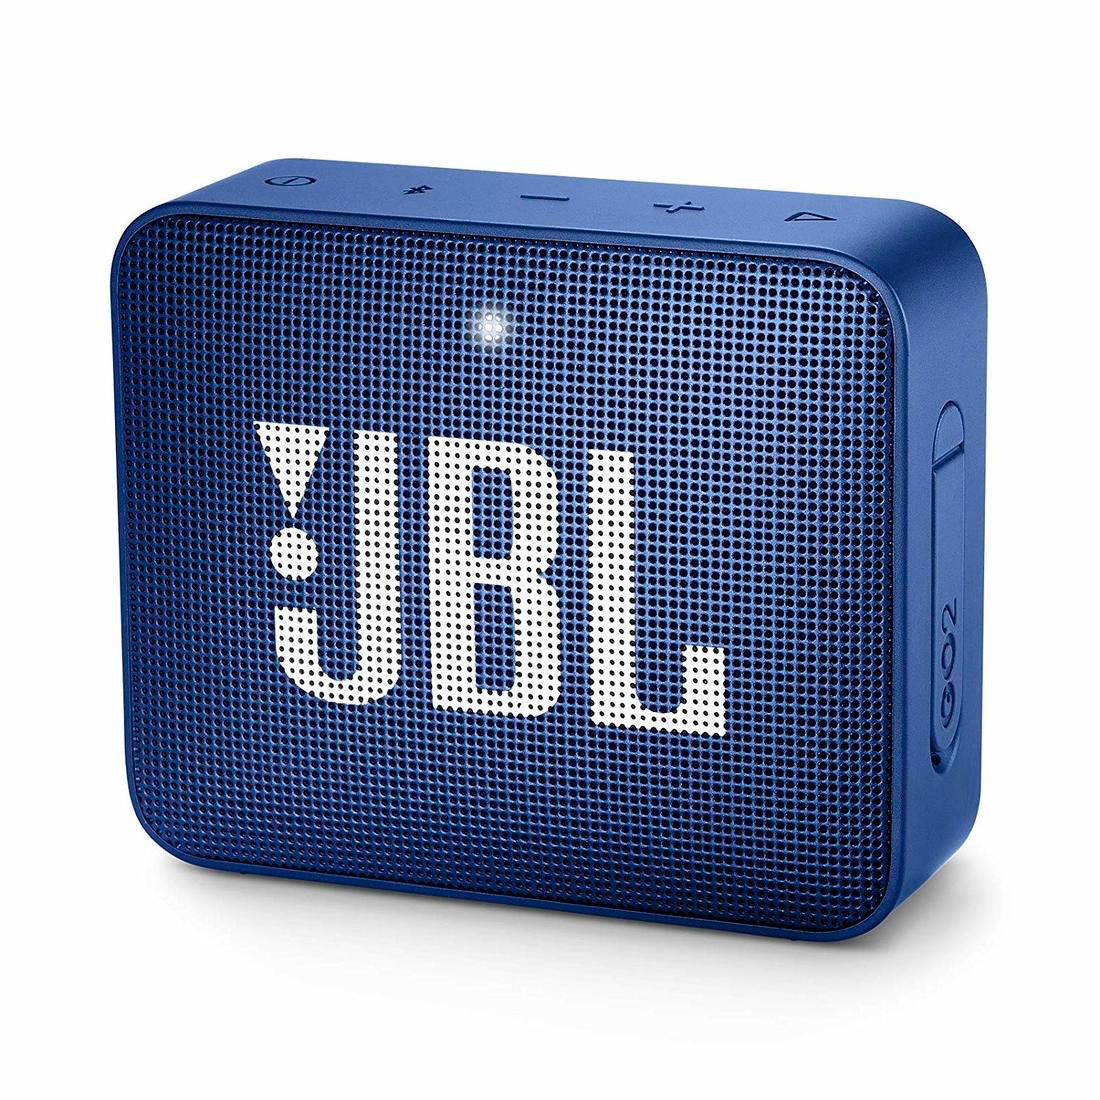 Parlante Portátil Sumergible Impermeable JBL GO 2 Color Azul